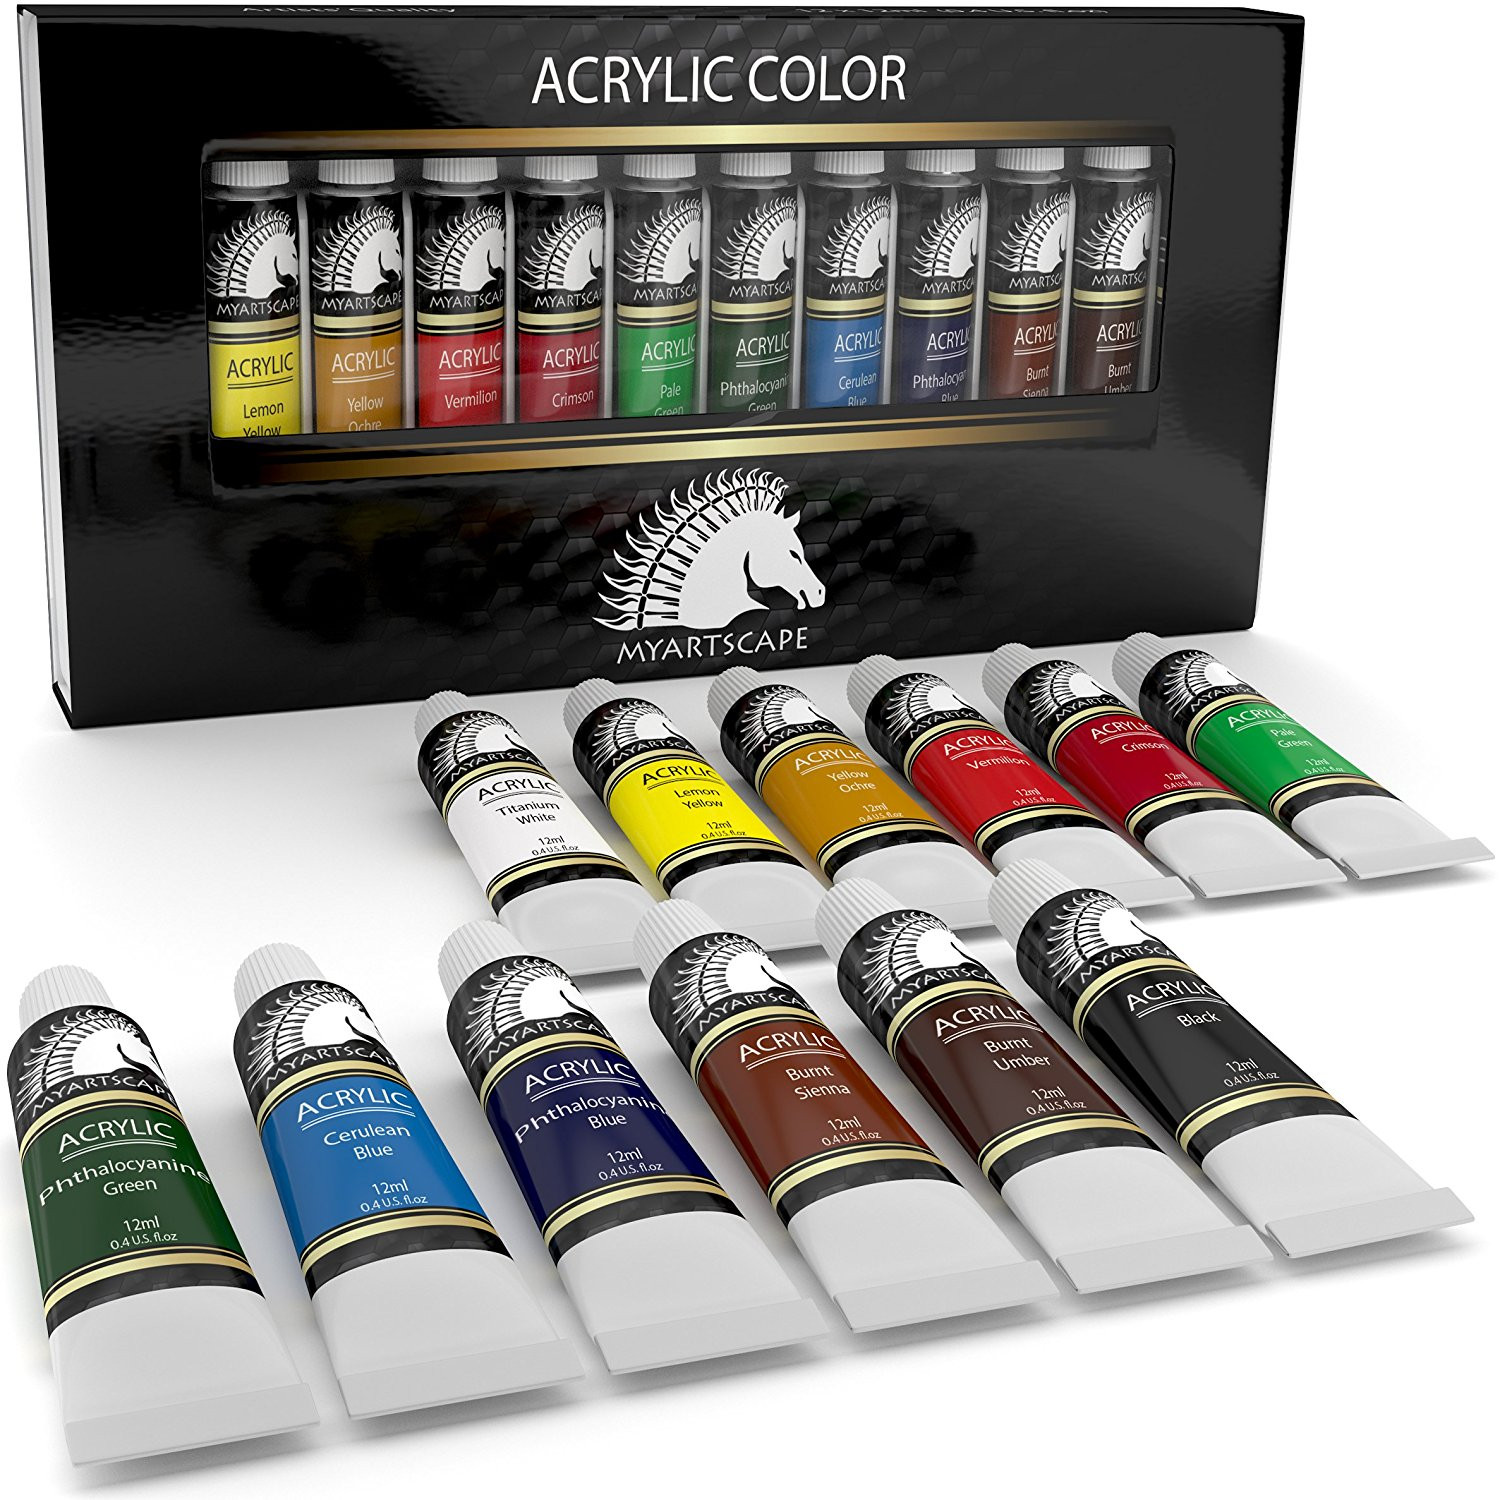 Acrylic Paints Nail Art
 Acrylic Paint Set – Artist Quality Paints for Painting